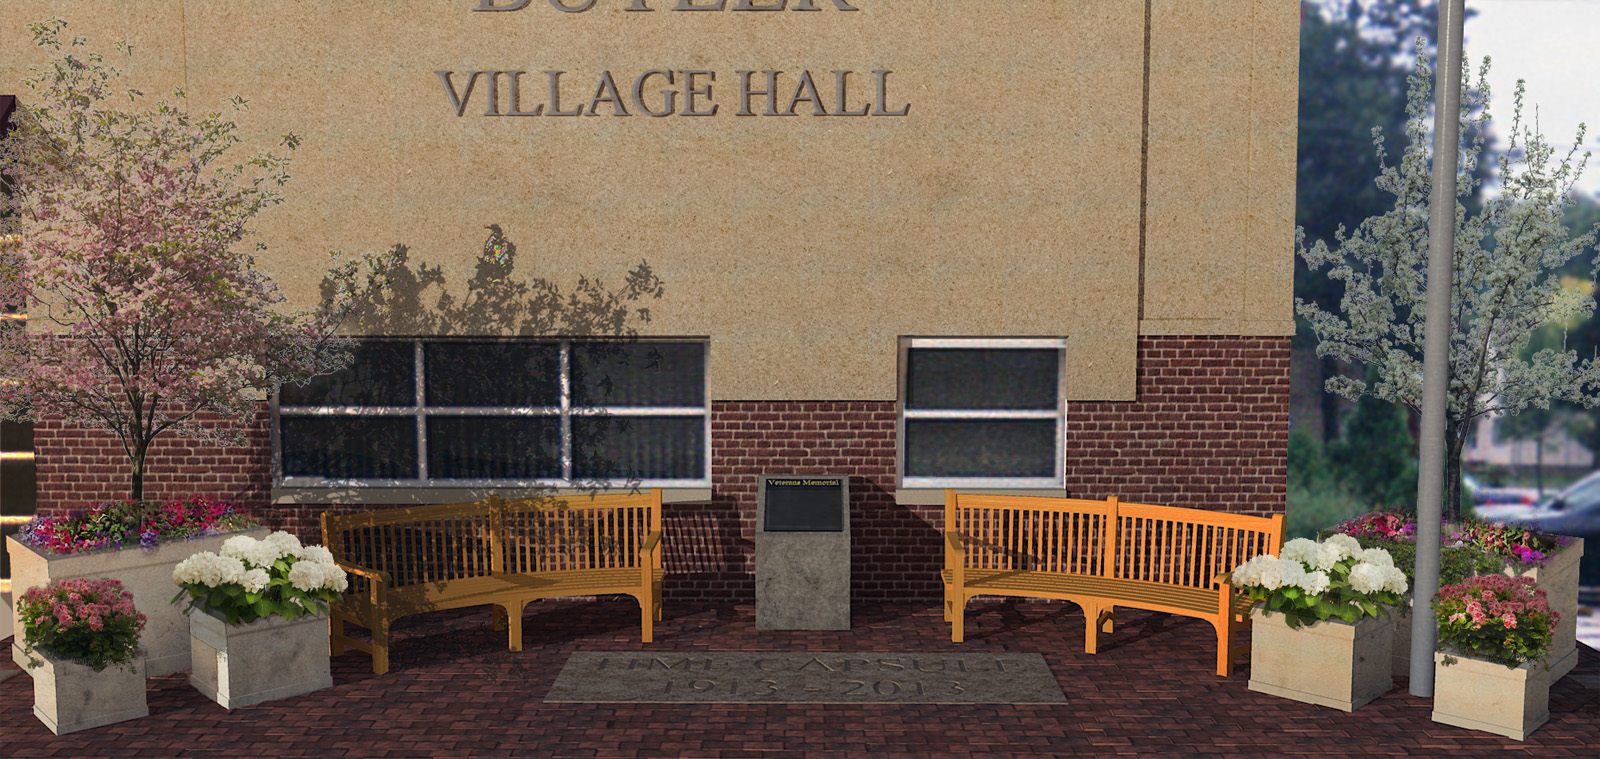 1_Butler-Village-Hall.jpg